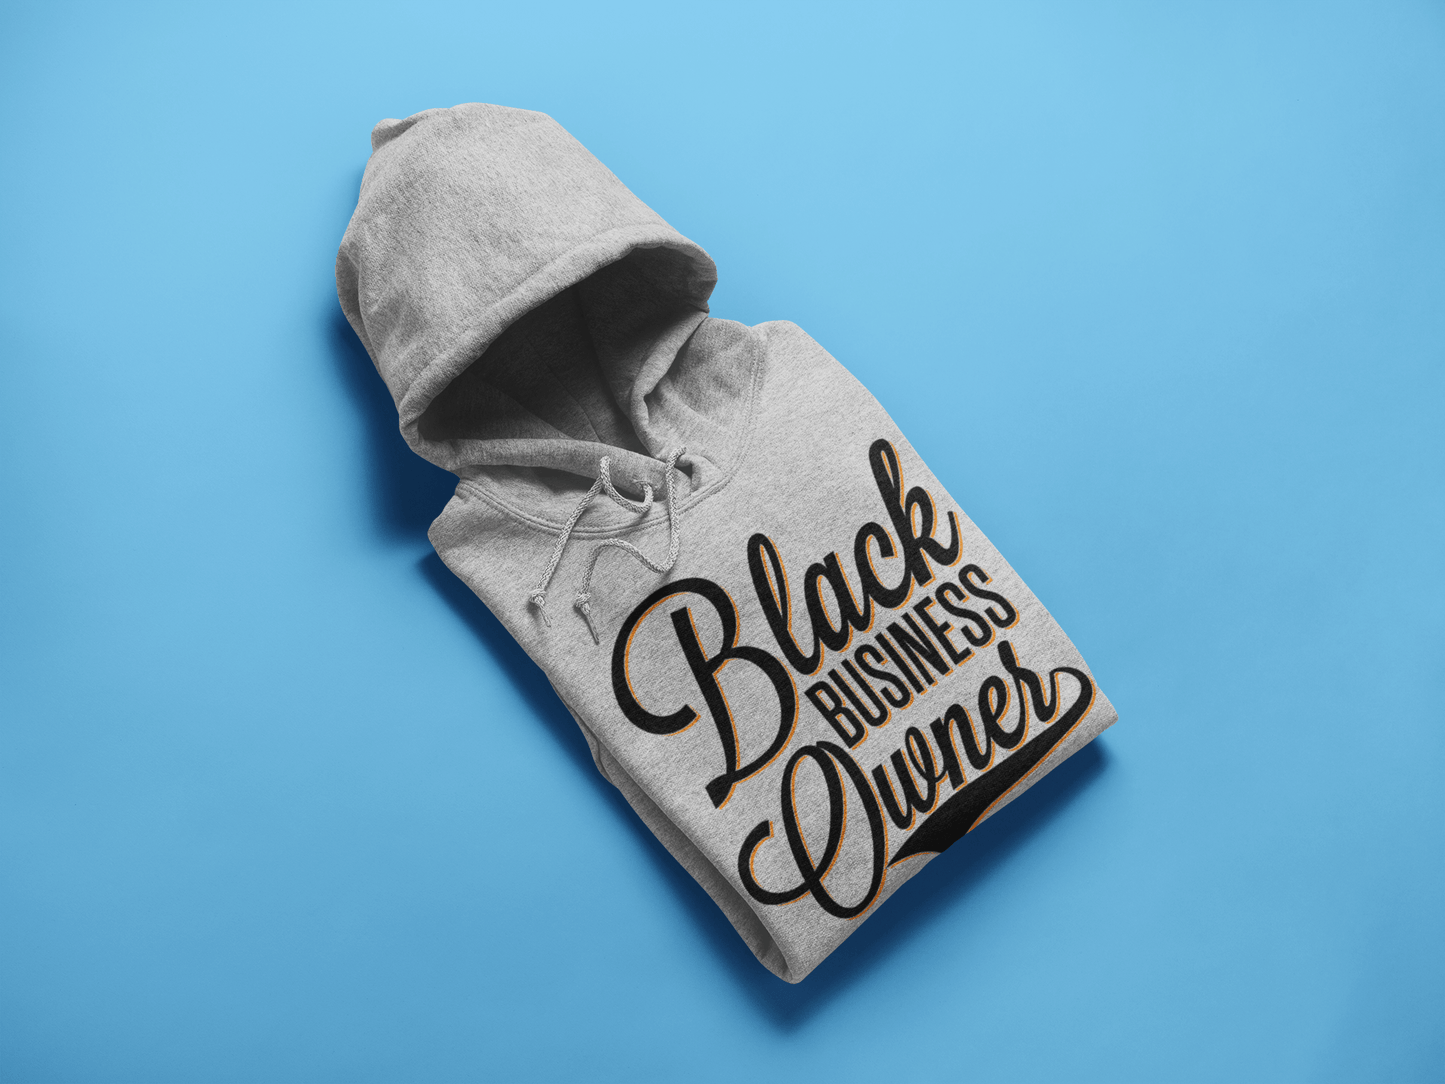 Black Business Owner Cursive (Black) Unisex Hooded Sweatshirt - Chocolate Ancestor